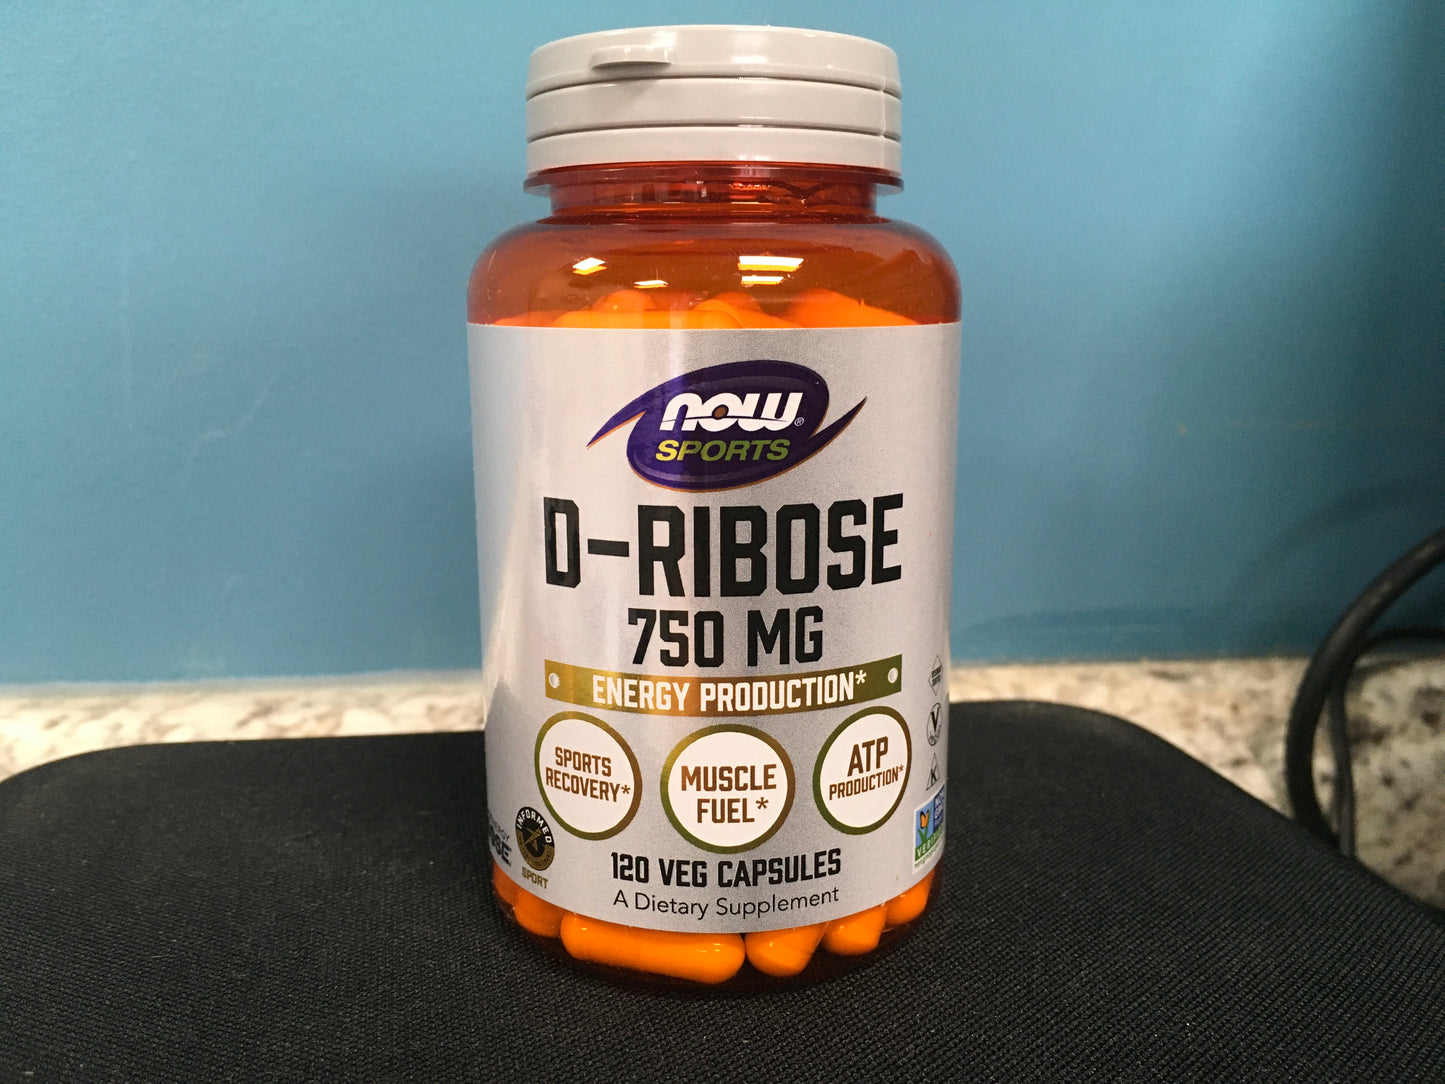 D-Ribose, 750 mg, 120 Veg Capsules